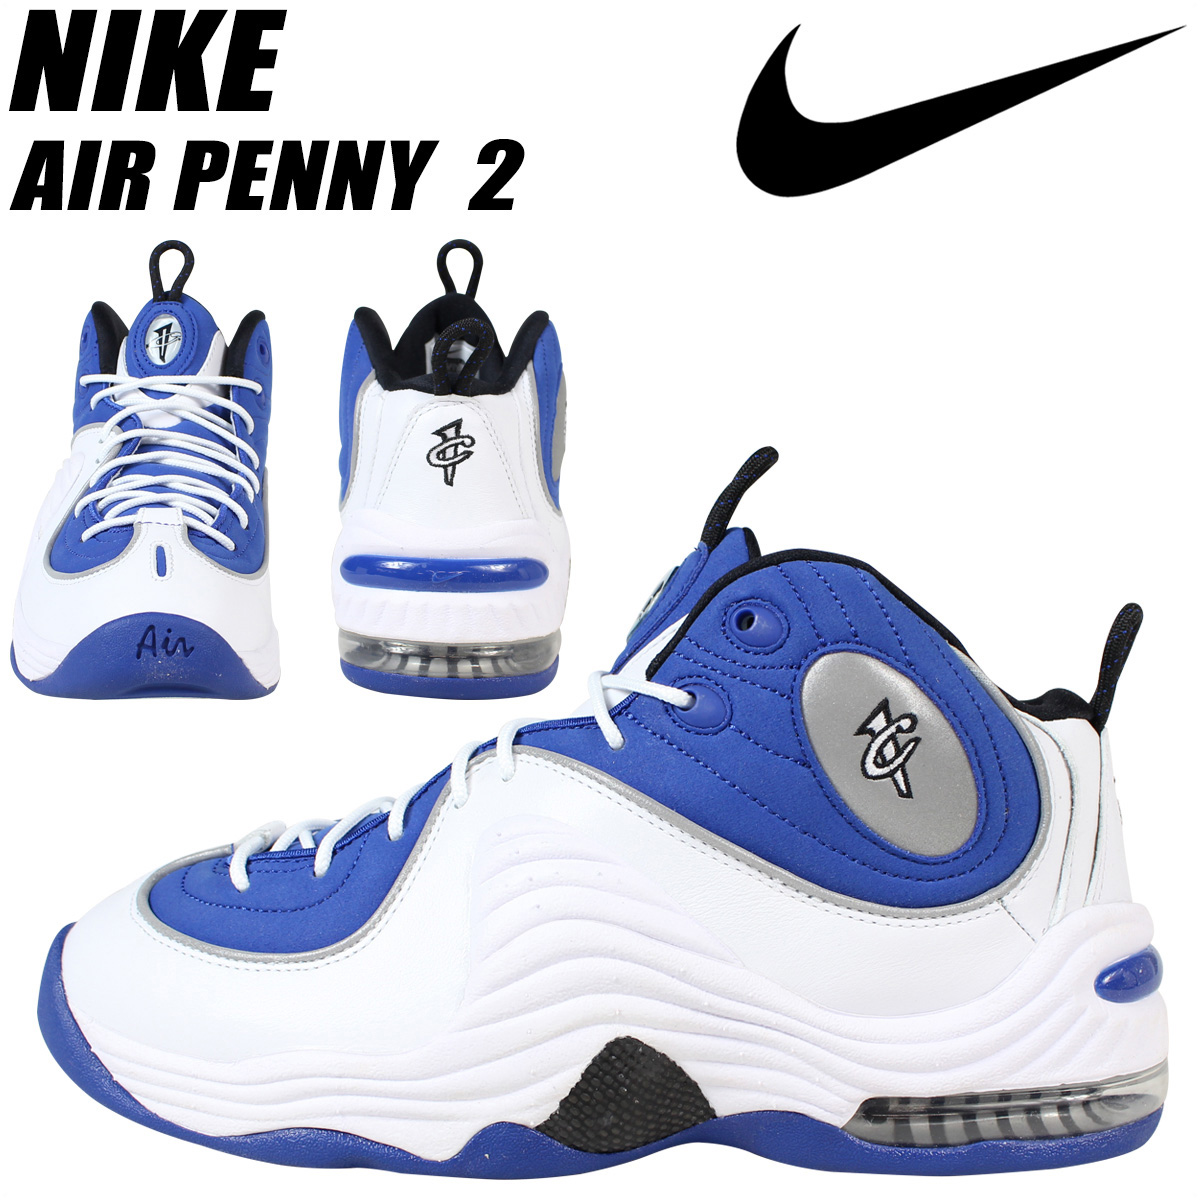 air penny 2